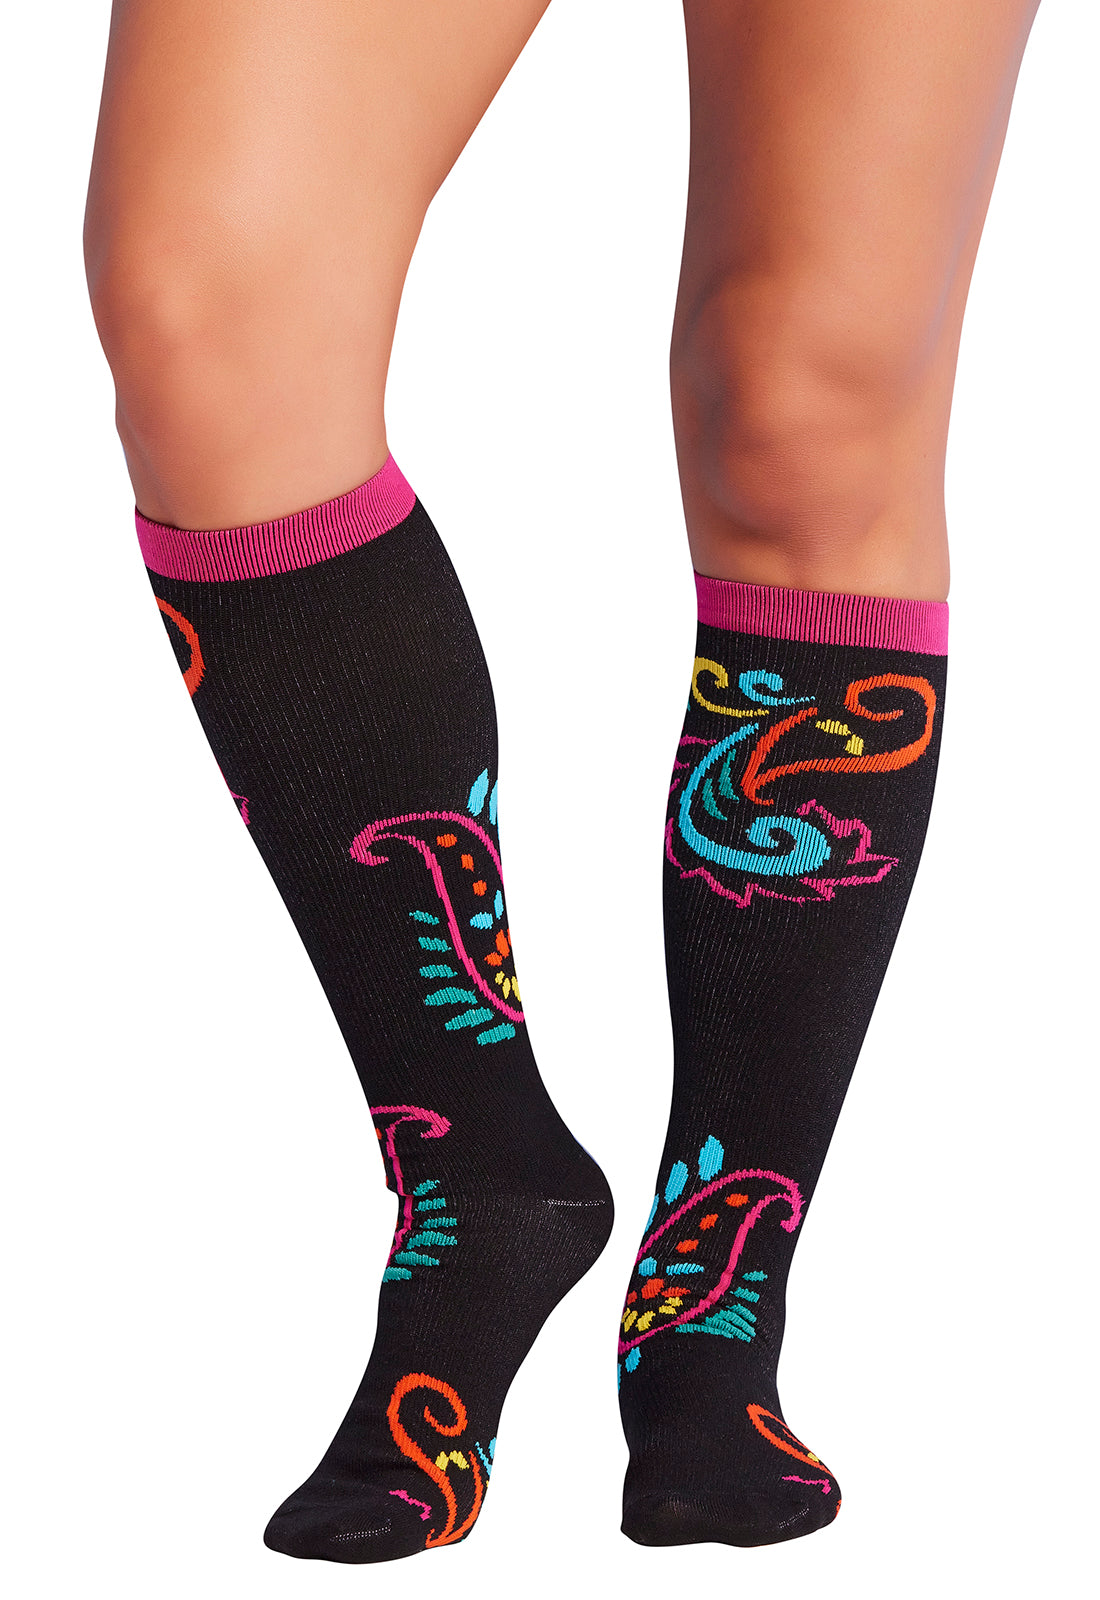 Plus Size Fit - Compression Socks 10-15mmHg Compression Socks Cherokee Legwear Perfect Paisley  